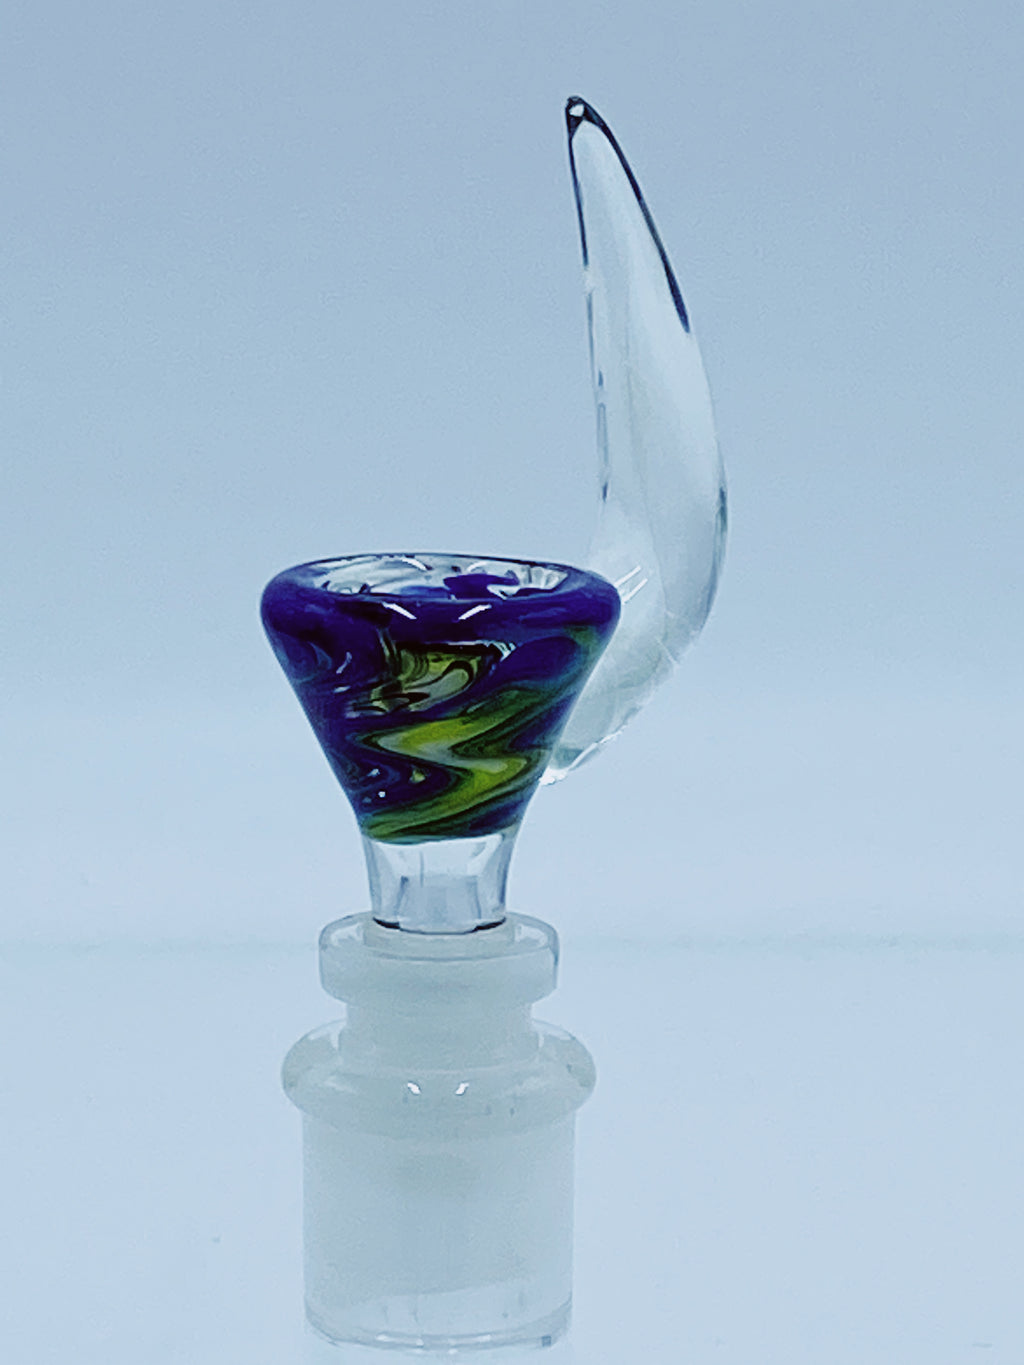 Kobb Glass 14 mm Wig Wag Bowl